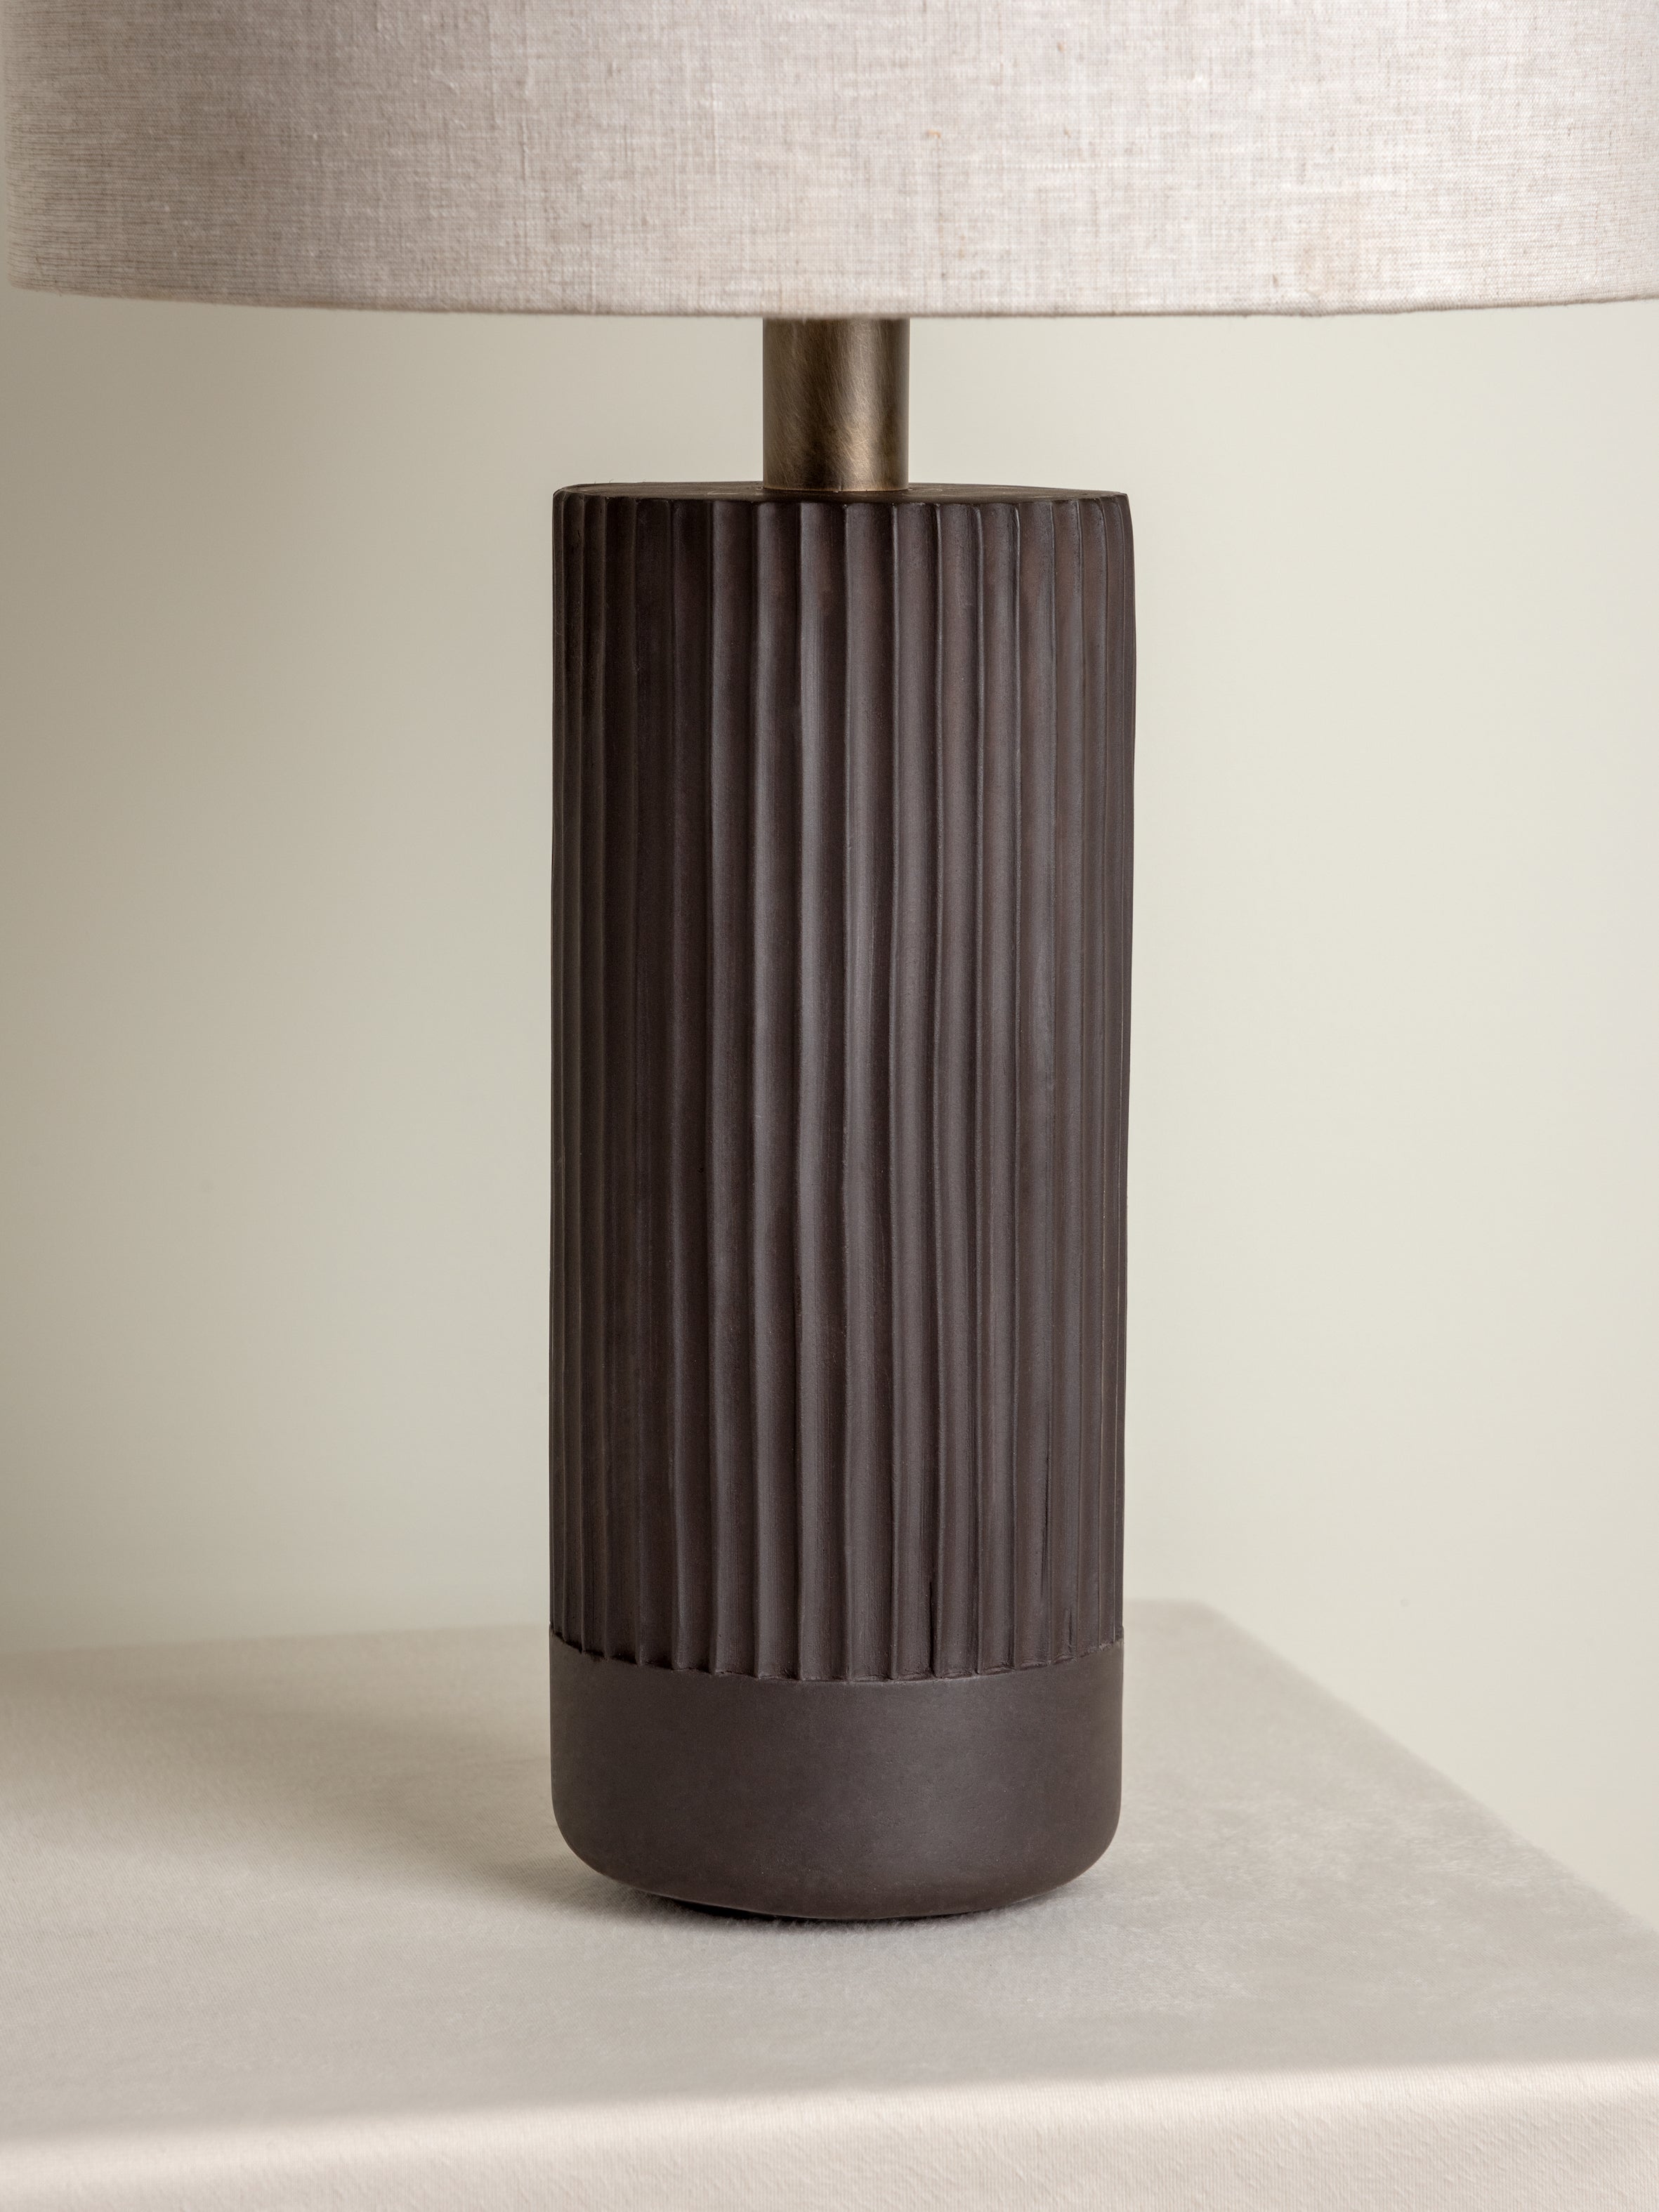 Nitara - chocolate ribbed concrete table lamp | Table Lamp | Lights & Lamps | UK | Modern Affordable Designer Lighting